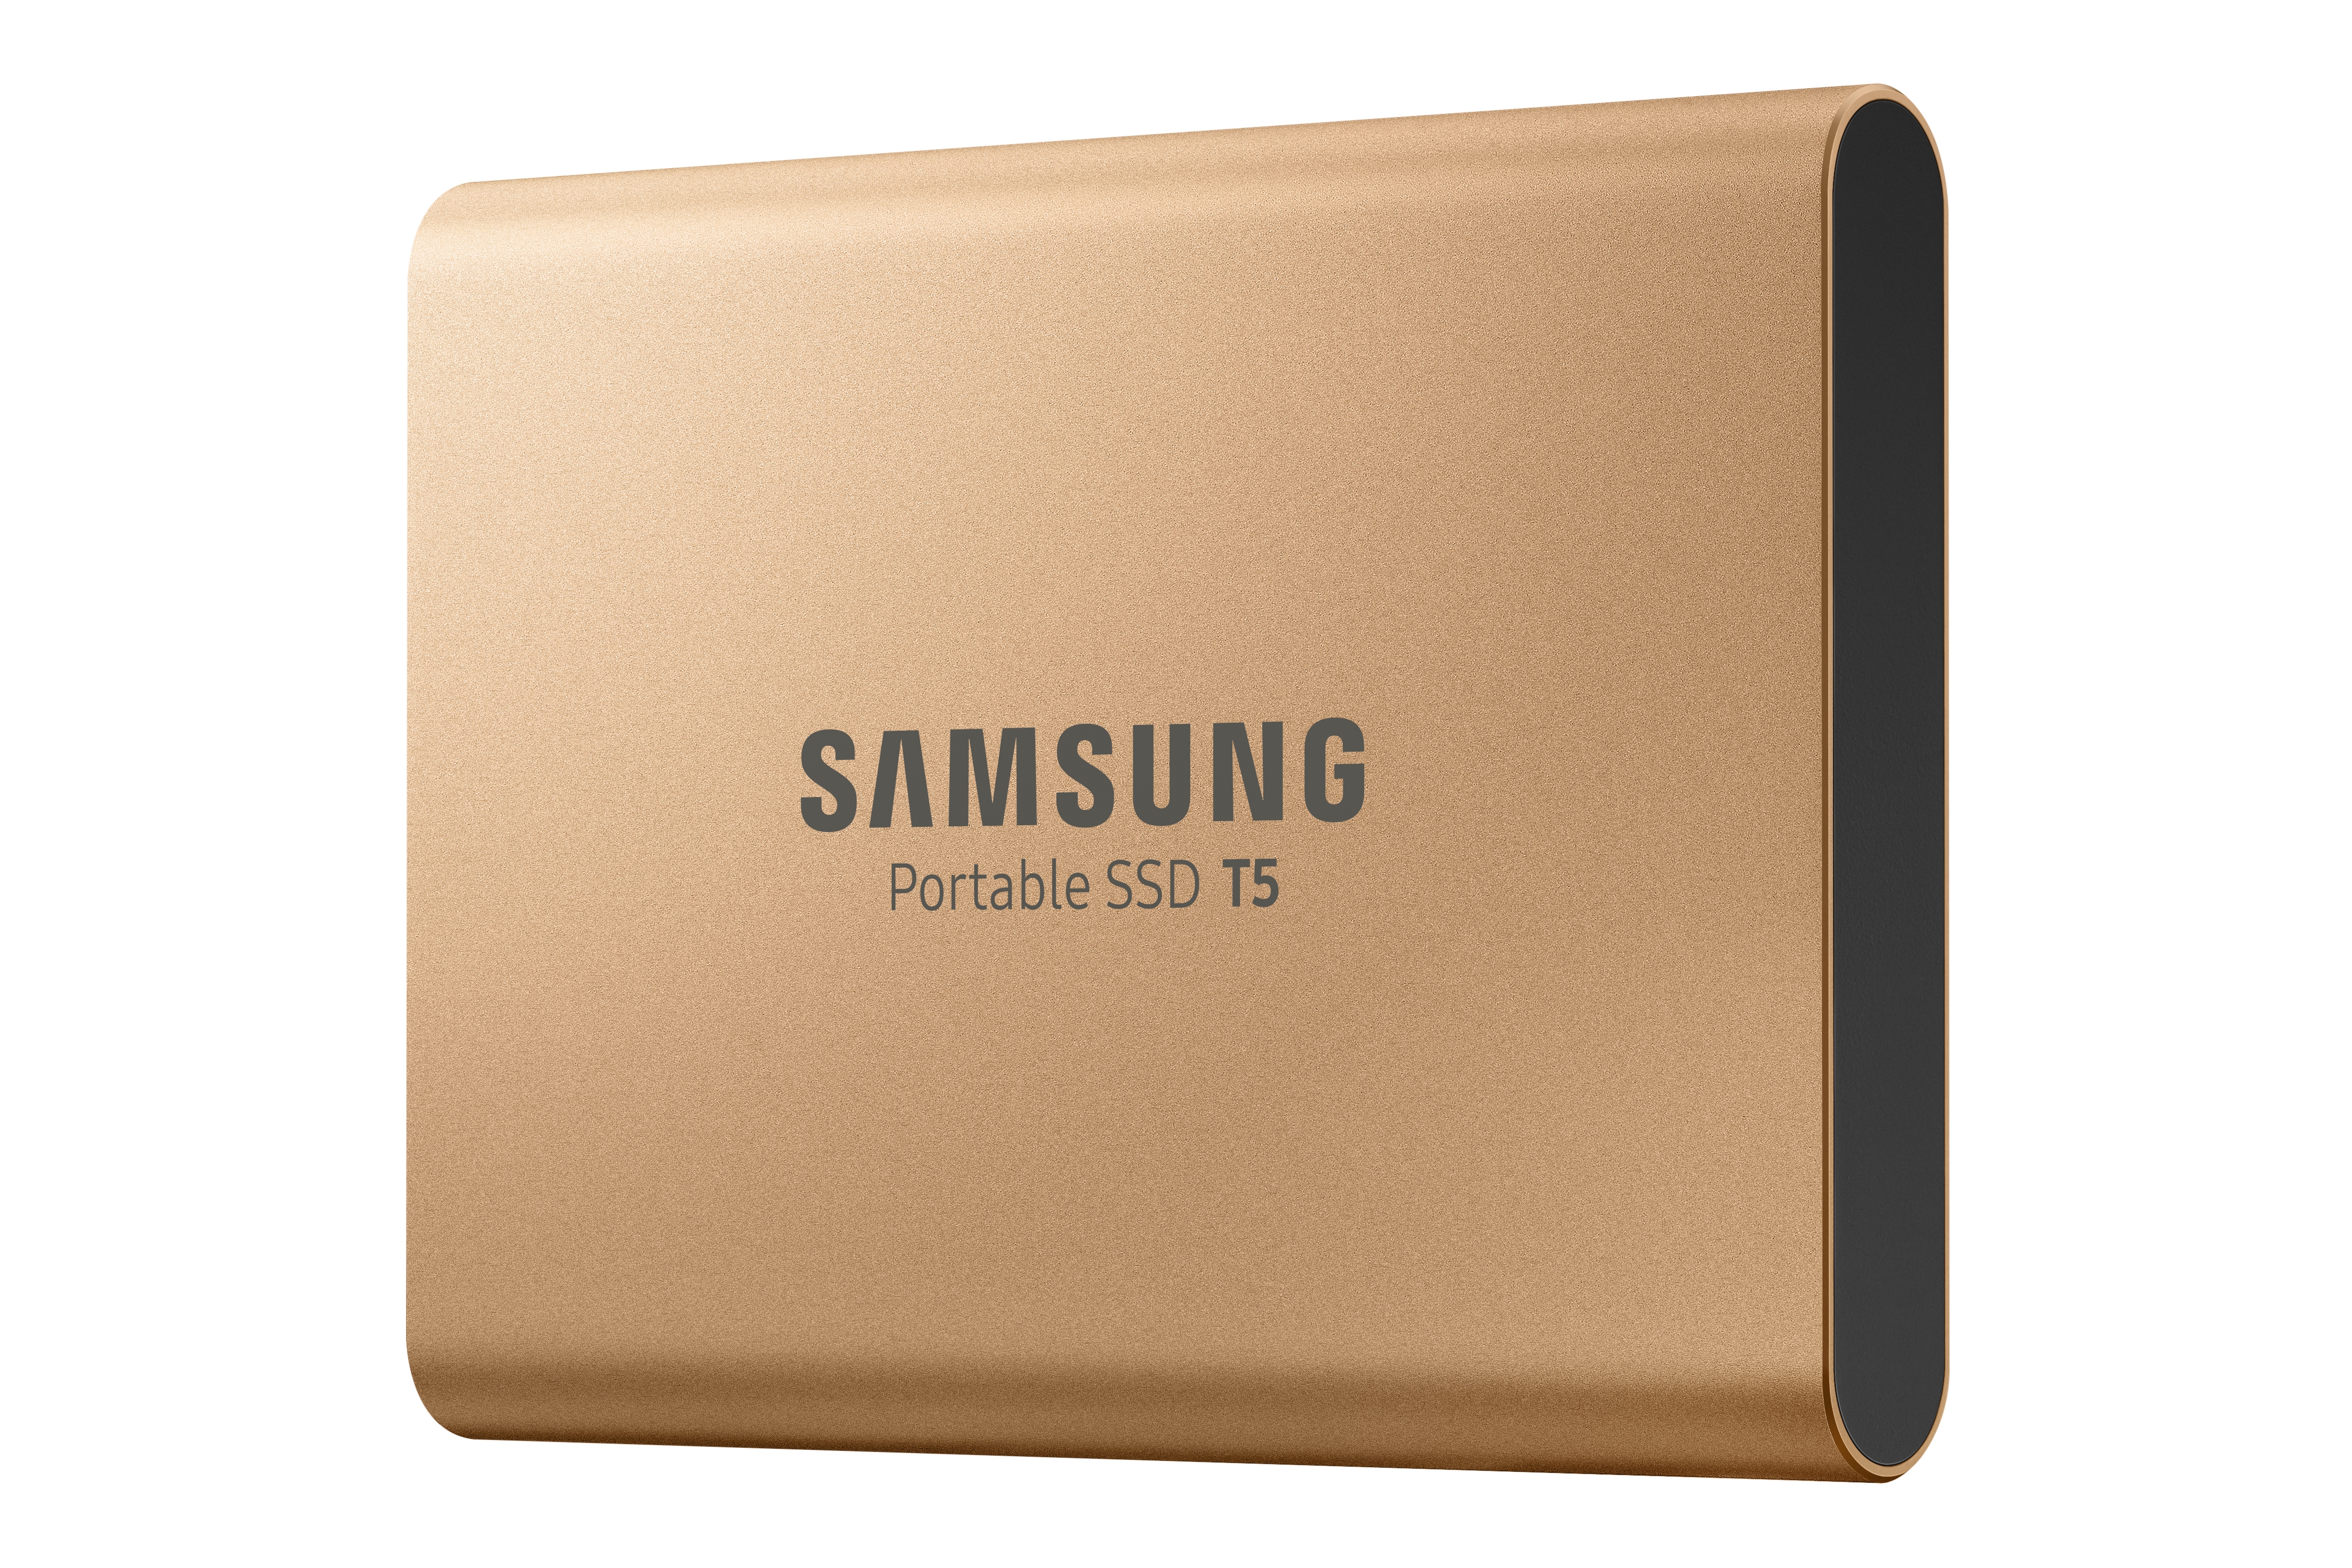 Portable SSD 500GB Memory & Storage - MU-PA500G/WW | Samsung US